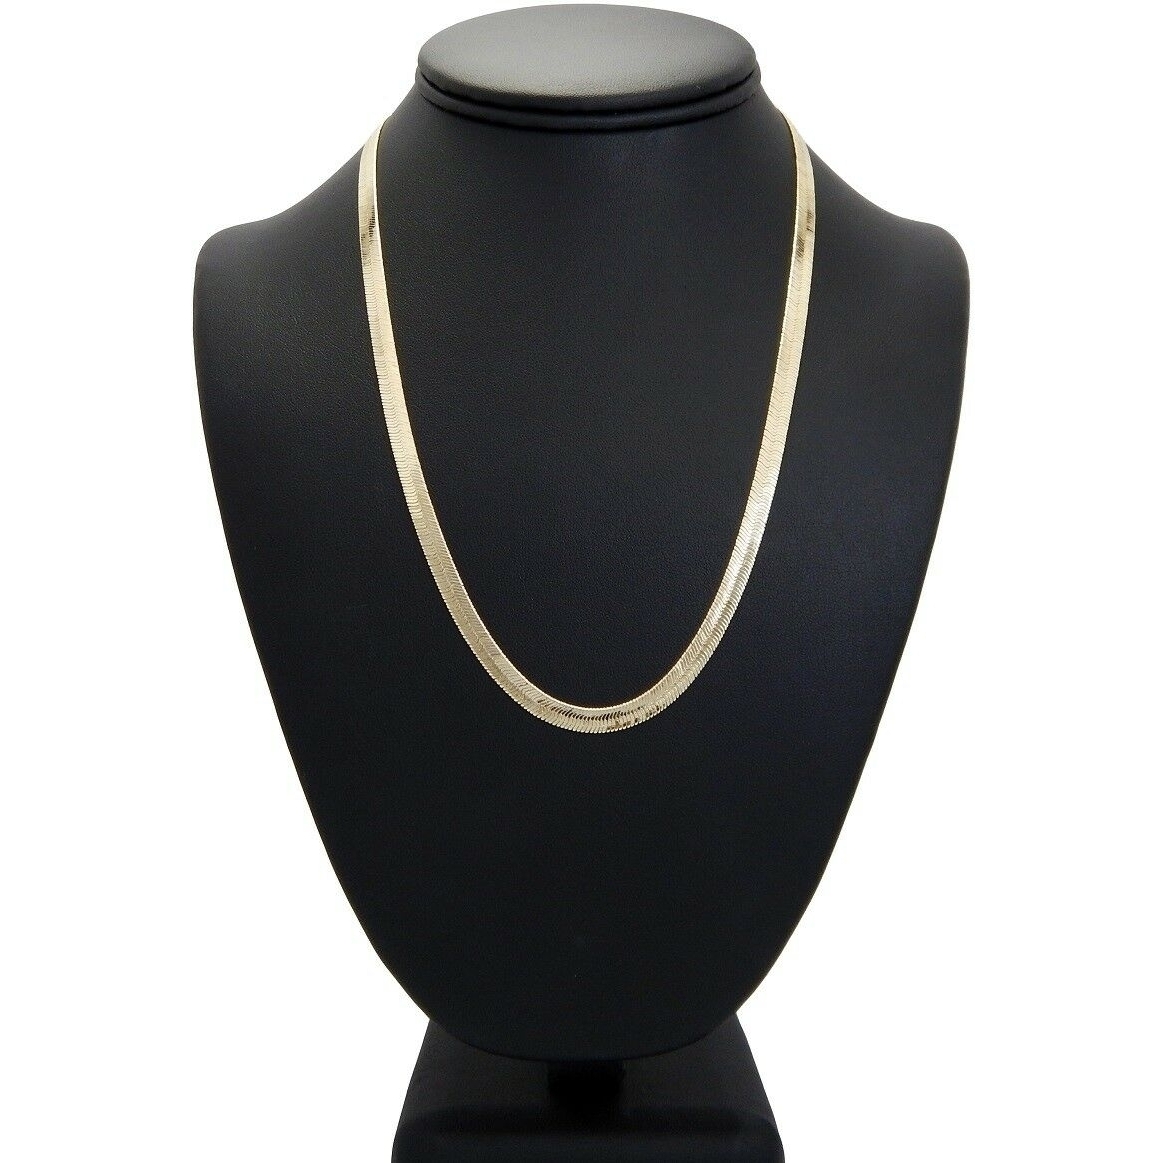 Herringbone Chain Necklace 5mm Width 18 20 24 30 Inch 14K Gold Filled High Polish Finsh High Finish Polished - 8''